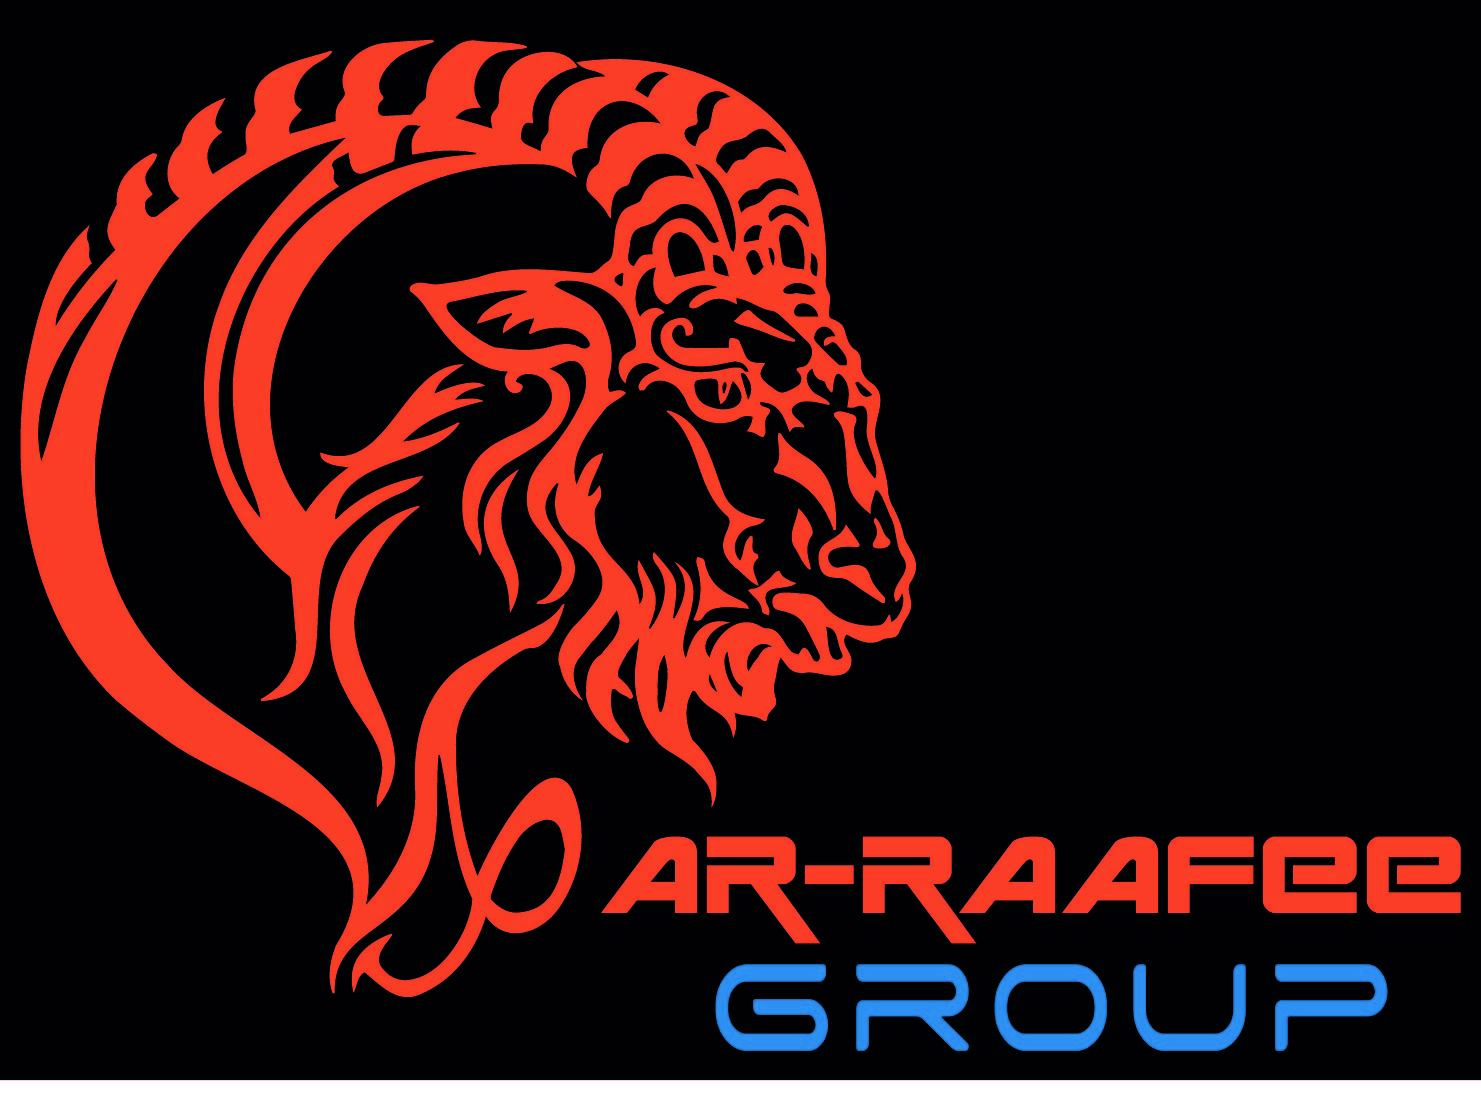 Ar-Raafee Group